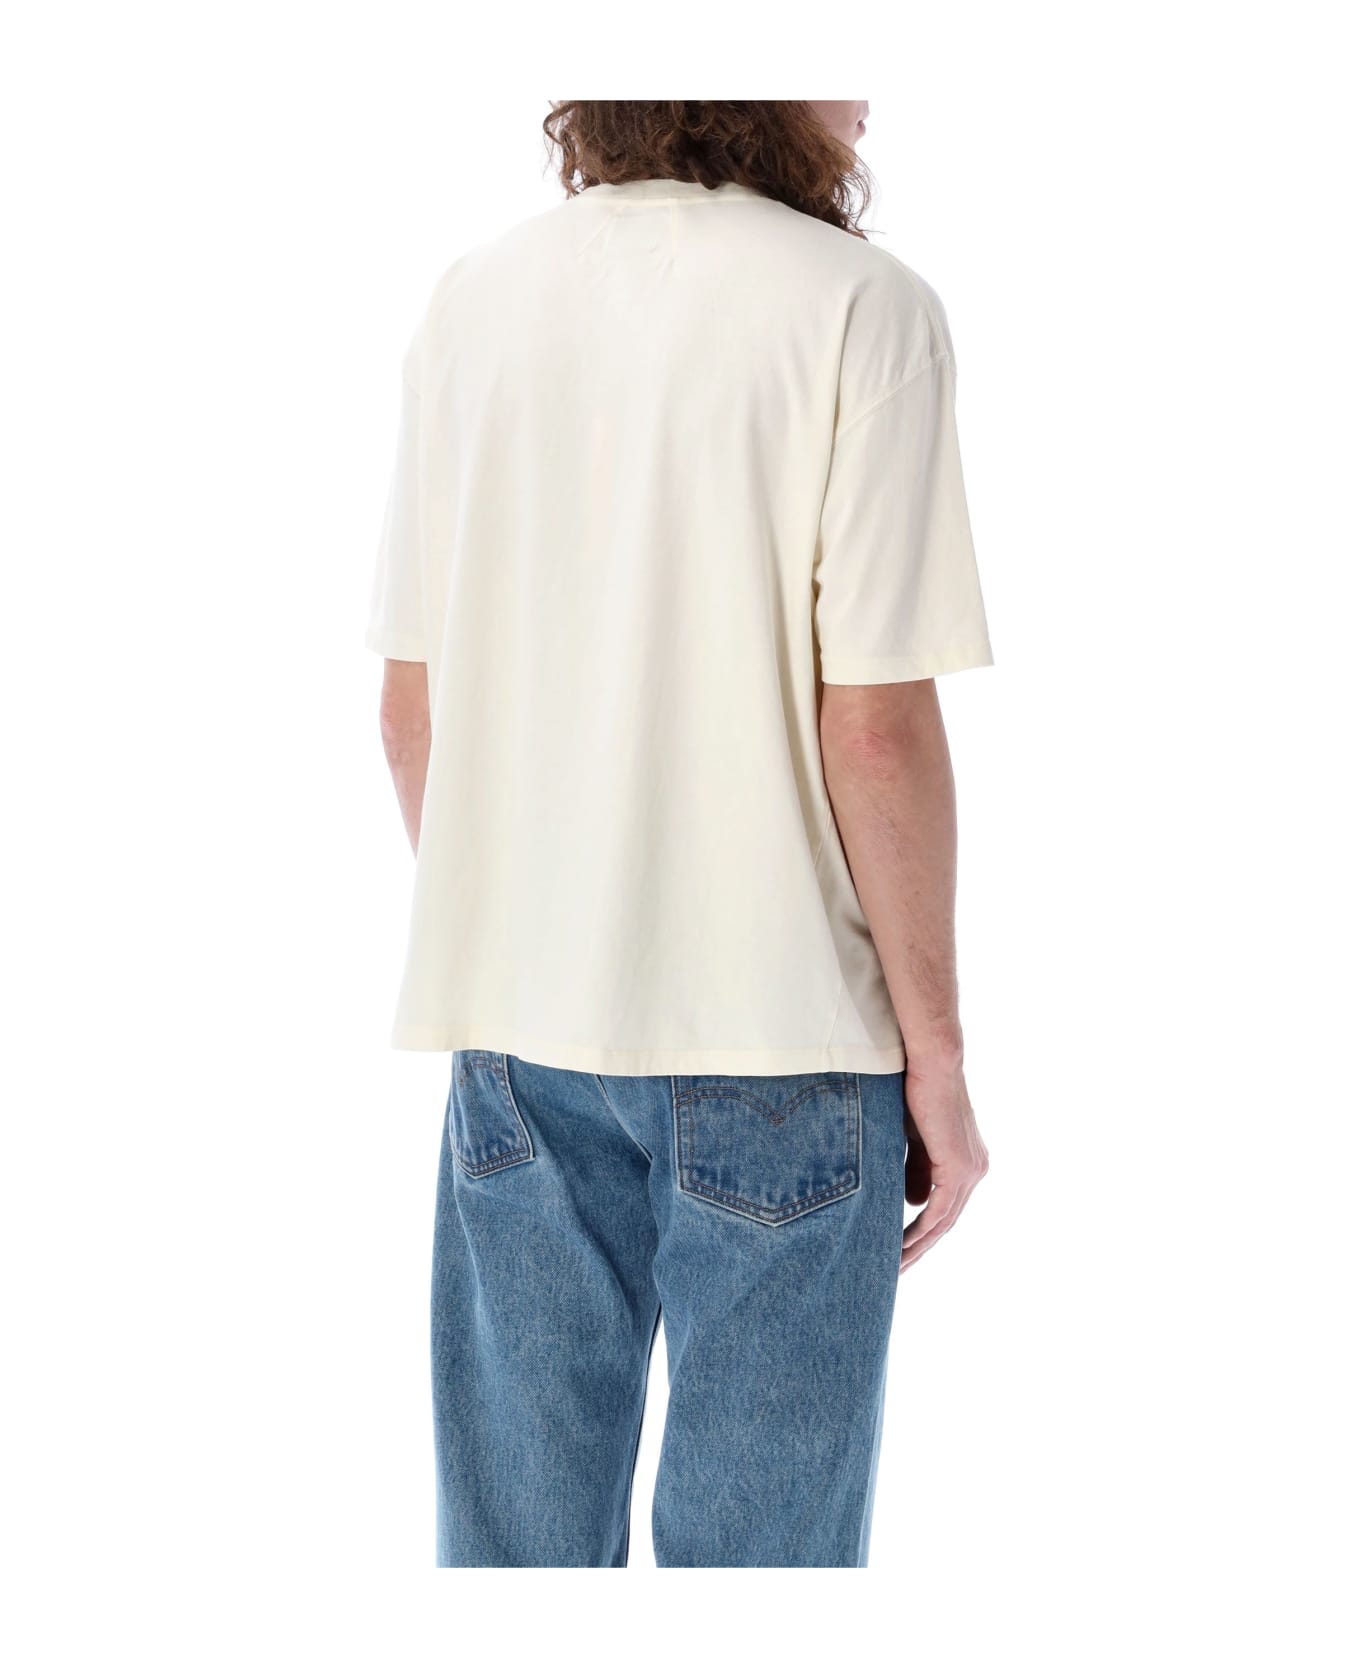 Rhude Chevron Eagle T-shirt - VINTAGE WHITE